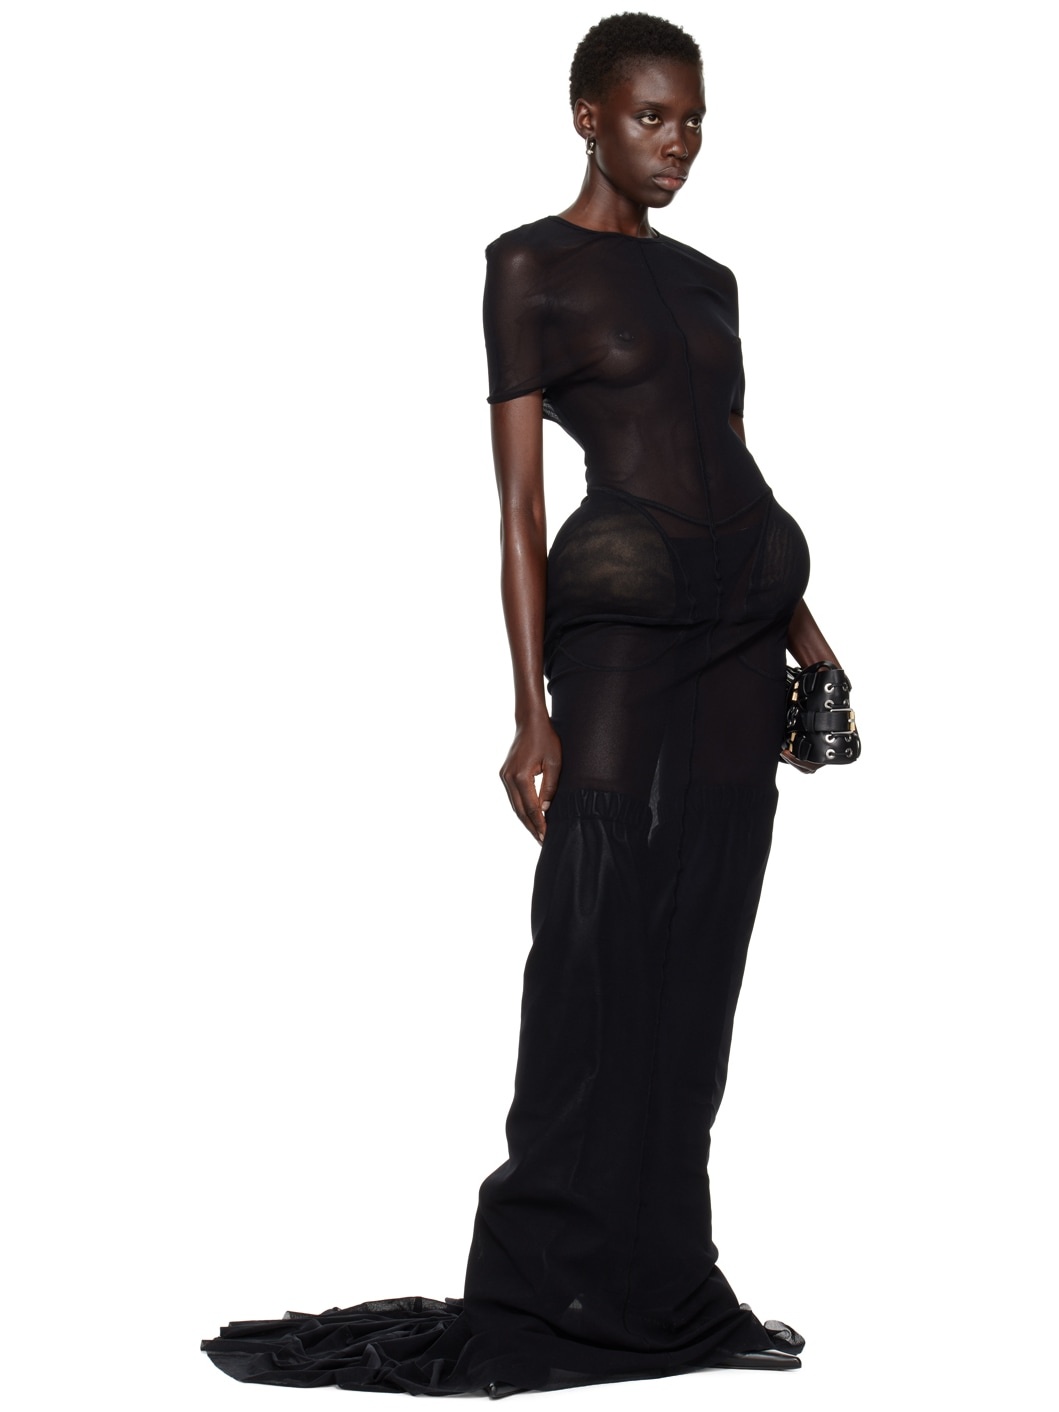 Black Shayne Oliver Edition Maxi Dress - 5